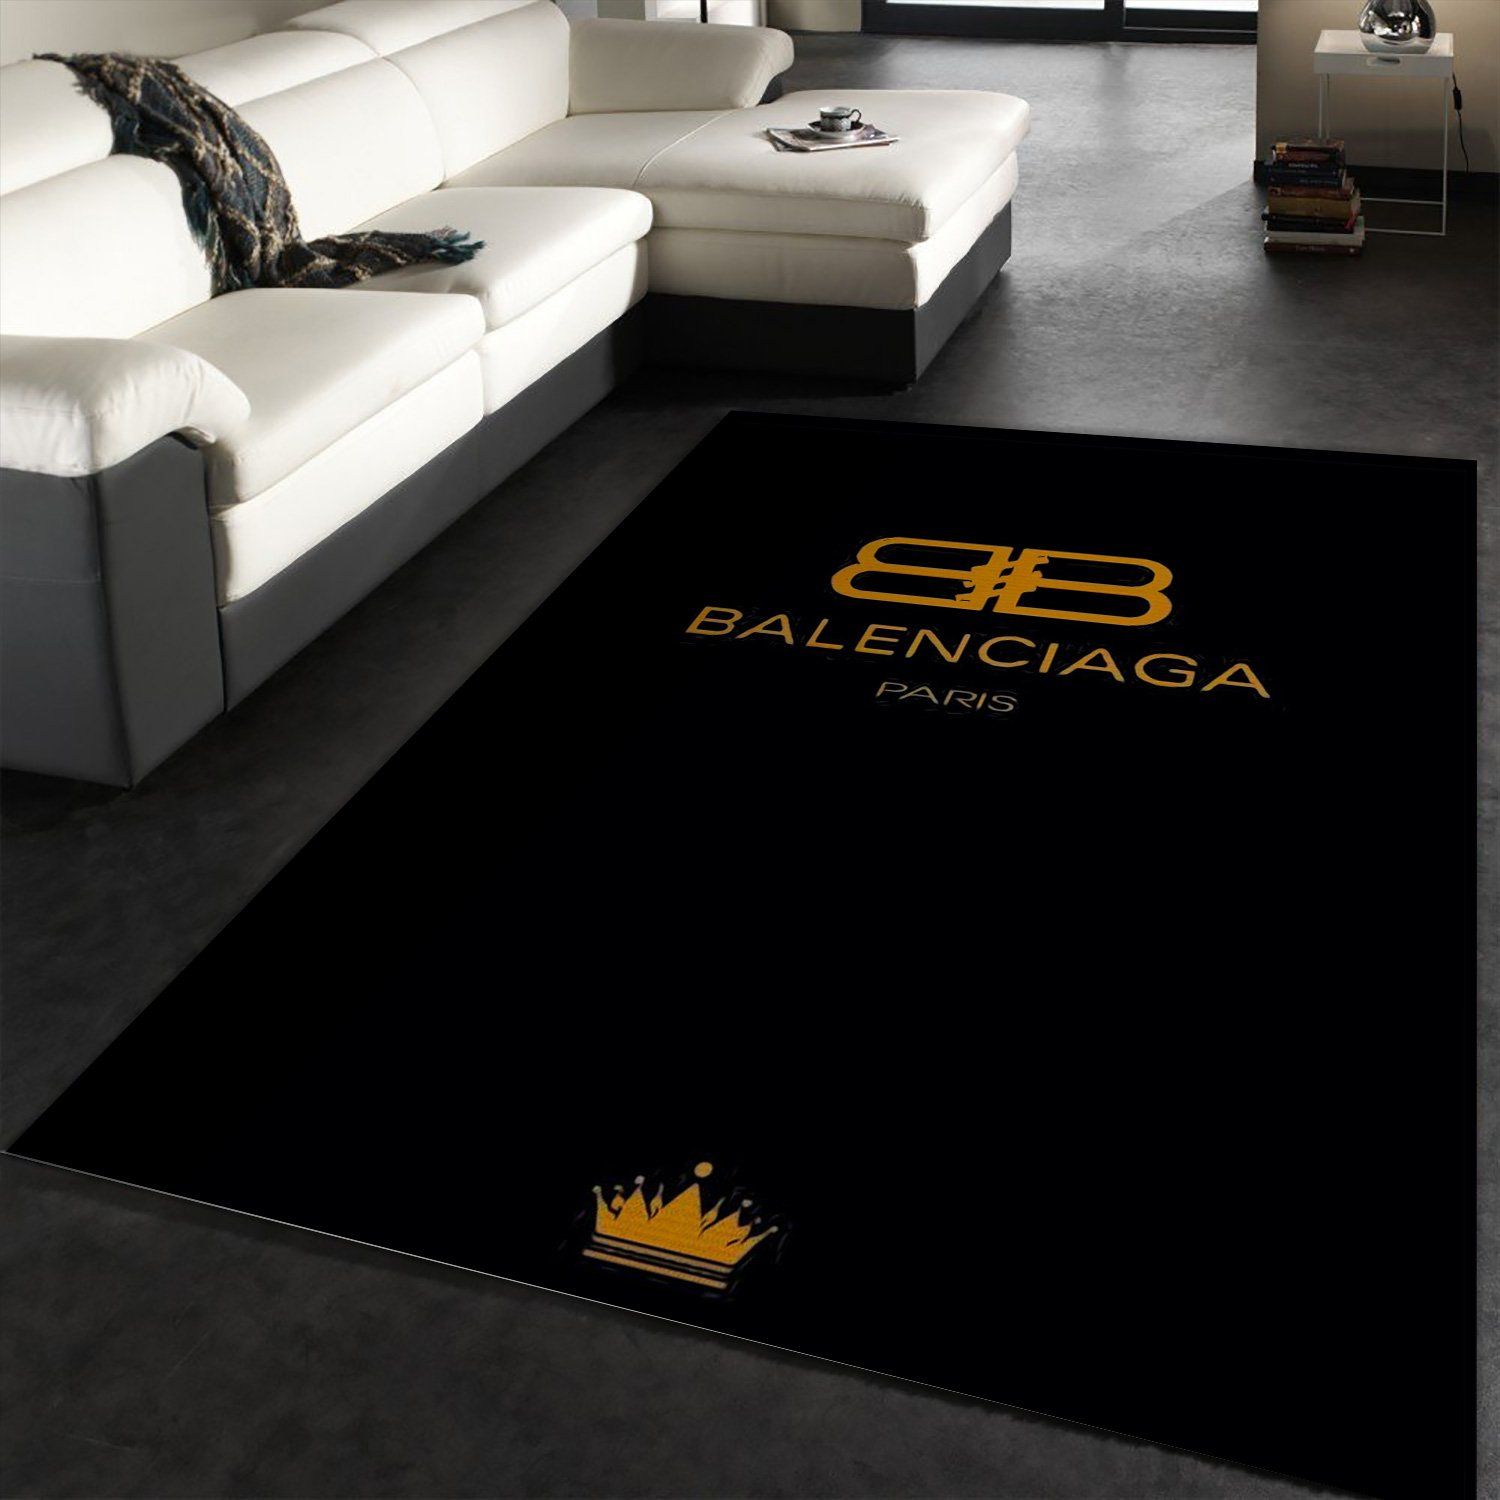 Balenciaga Paris Crown Rectangle Rug Luxury Area Carpet Home Decor Fashion Brand Door Mat